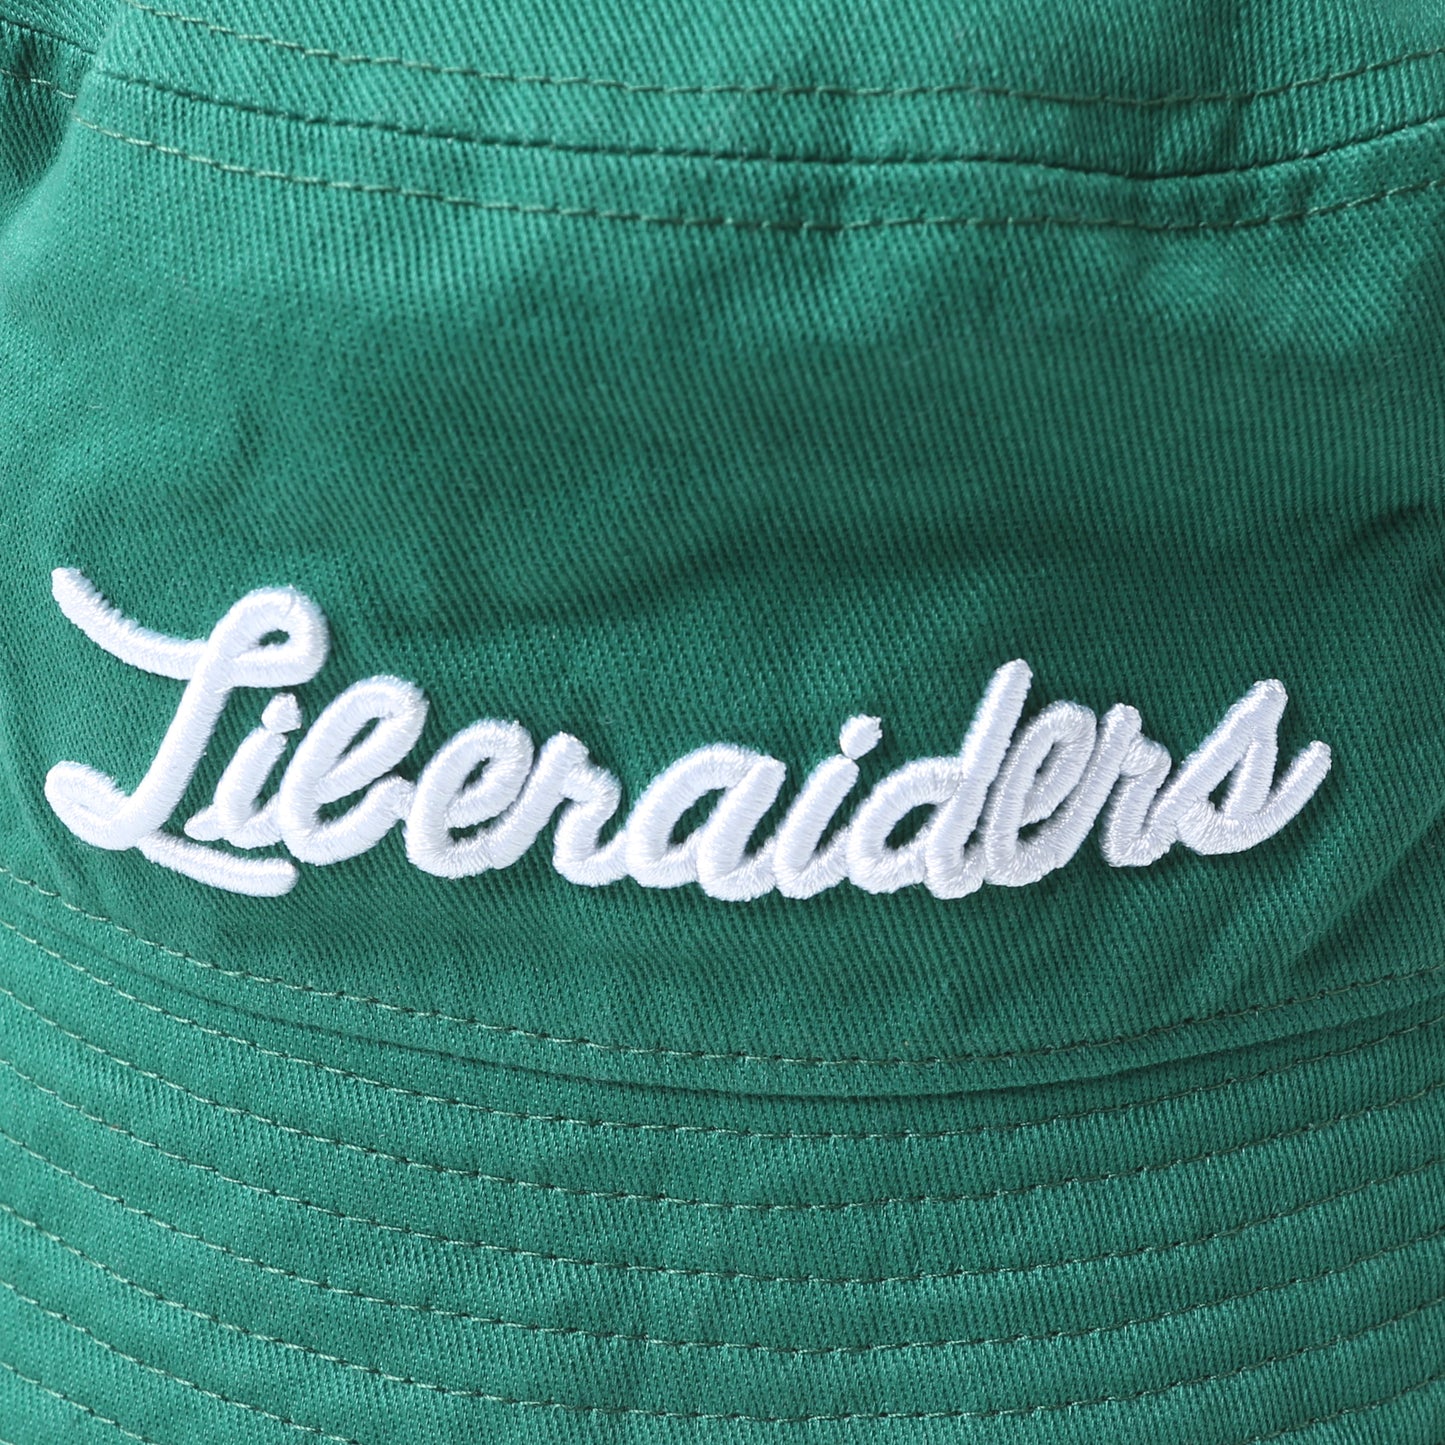 Liberaiders ® (リベレイダース)/ CHAMPIONSHIP BUCKET HAT 70902 / GREEN